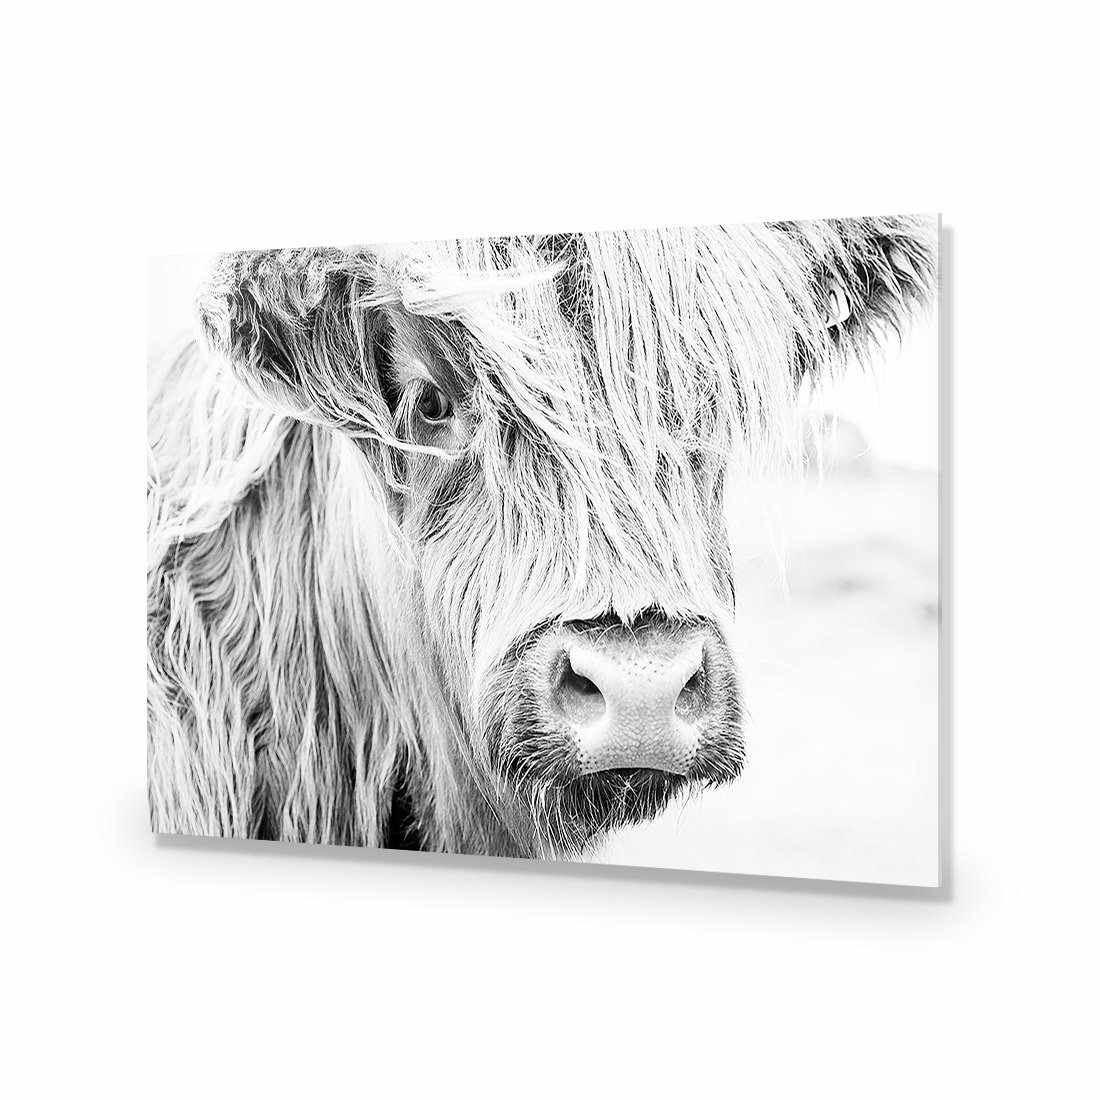 Henrietta the Highland Cow-Acrylic-Wall Art Design-Without Border-Acrylic - No Frame-59X40cm-Wall Art Designs